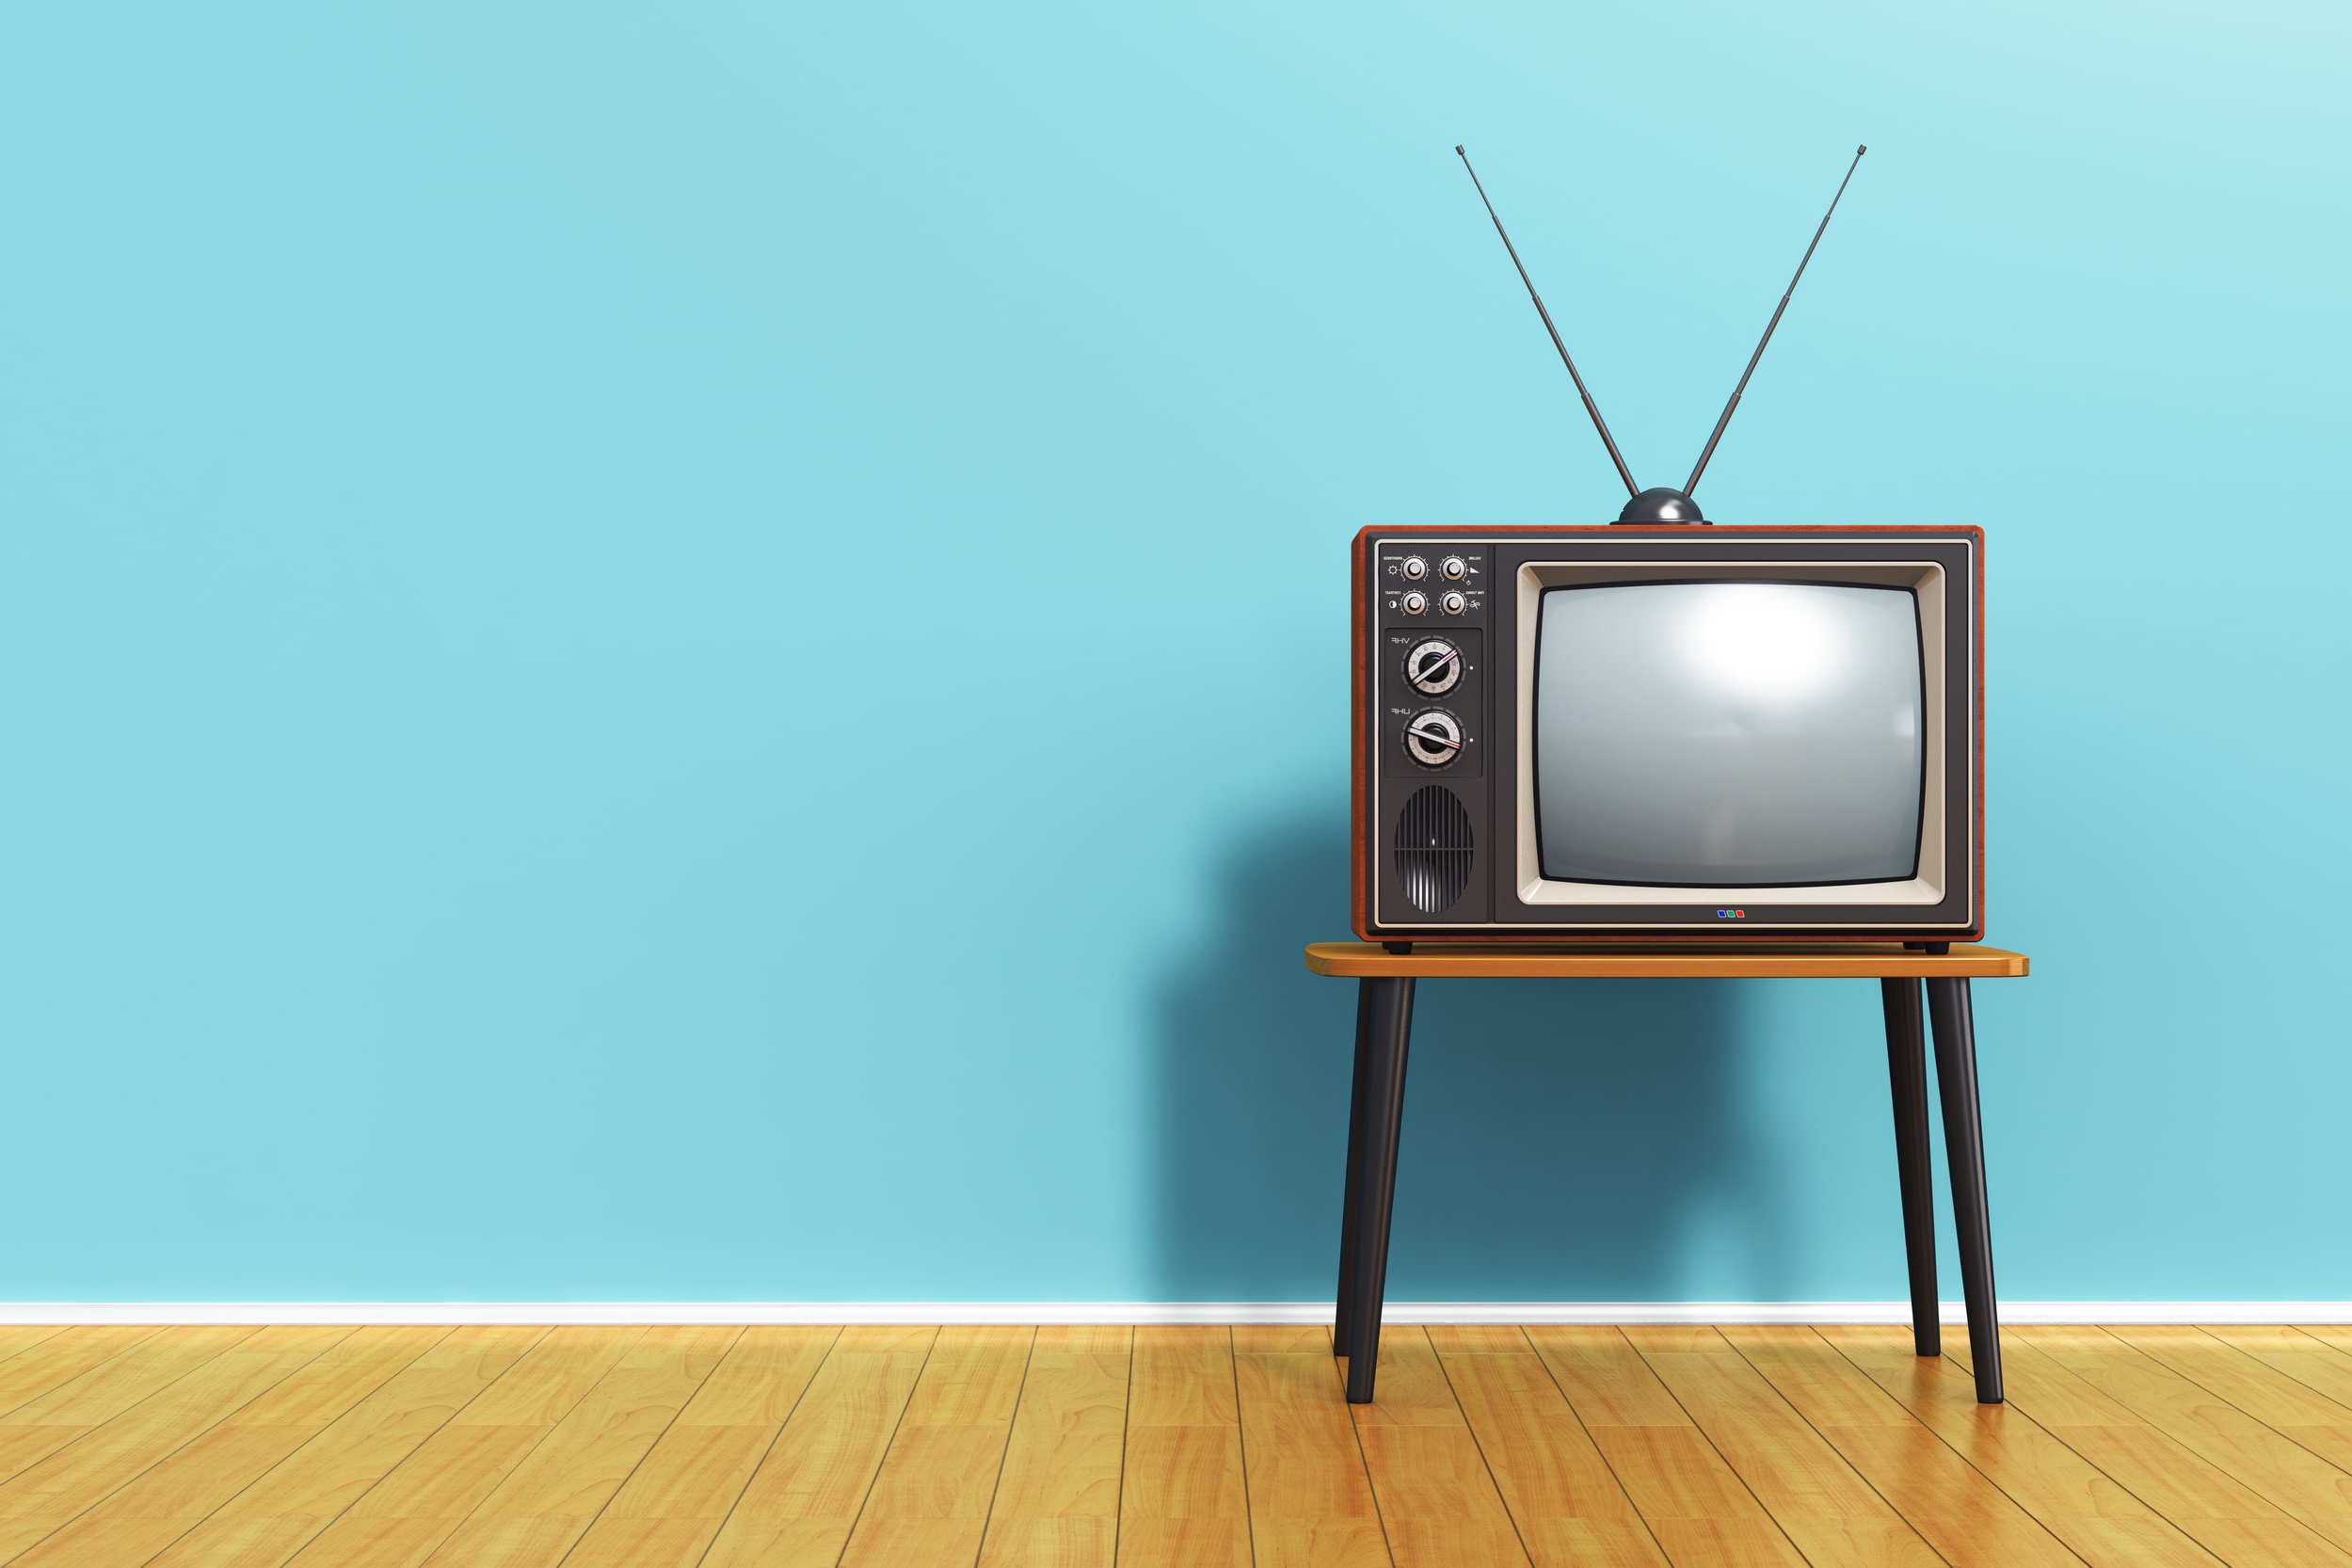 Взять в кредит телевизор. Советский телевизор хромакей. Телевизор с антенной. Старый телевизор с антенной. Телевизор на ножках.